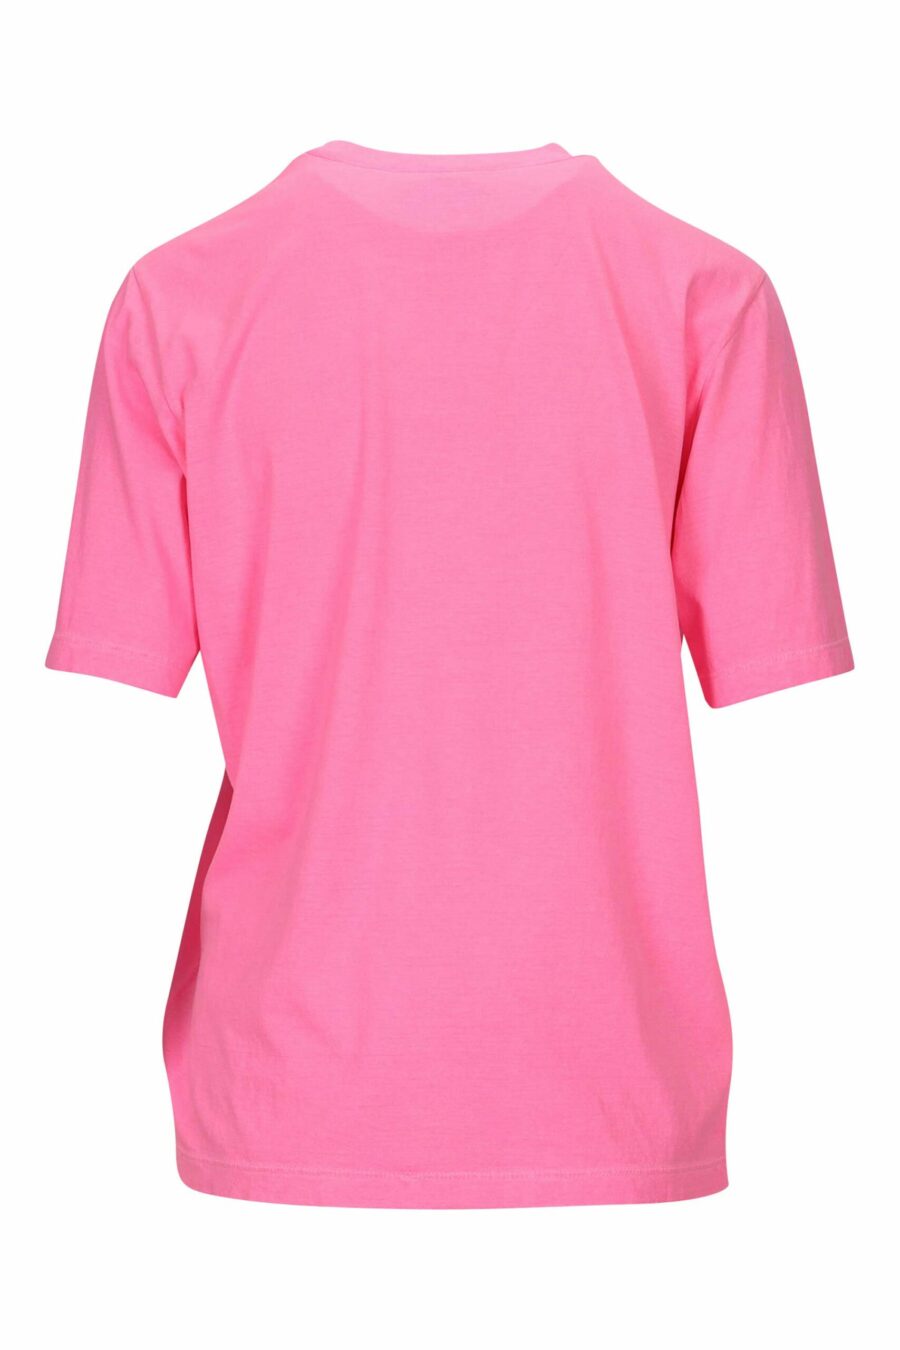 Fuchsiafarbenes T-Shirt mit neongrünem Logo - 8054148405106 1 skaliert